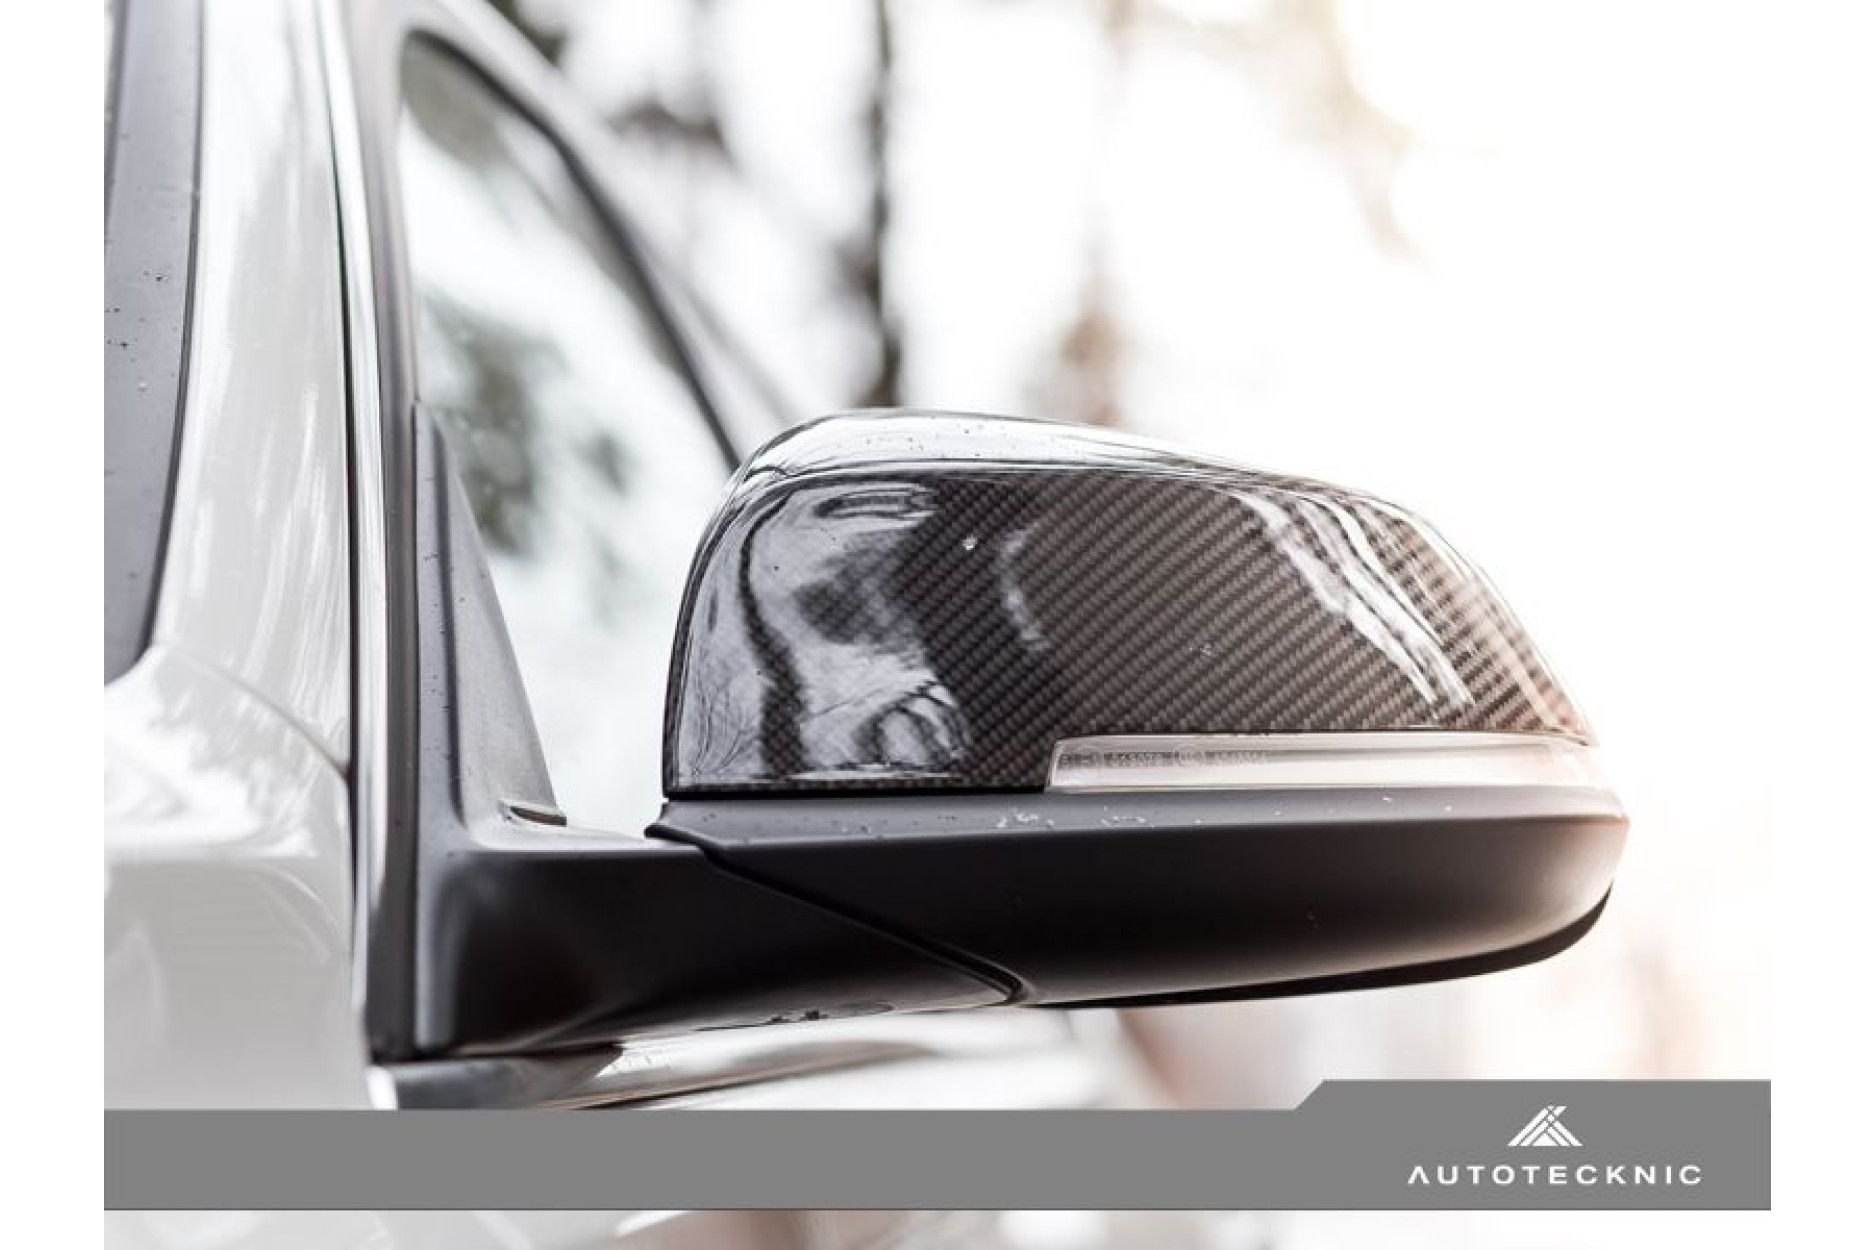 AutoTecknic Carbon Spiegelkappen Austausch - E46 M3 - online kaufen bei CFD